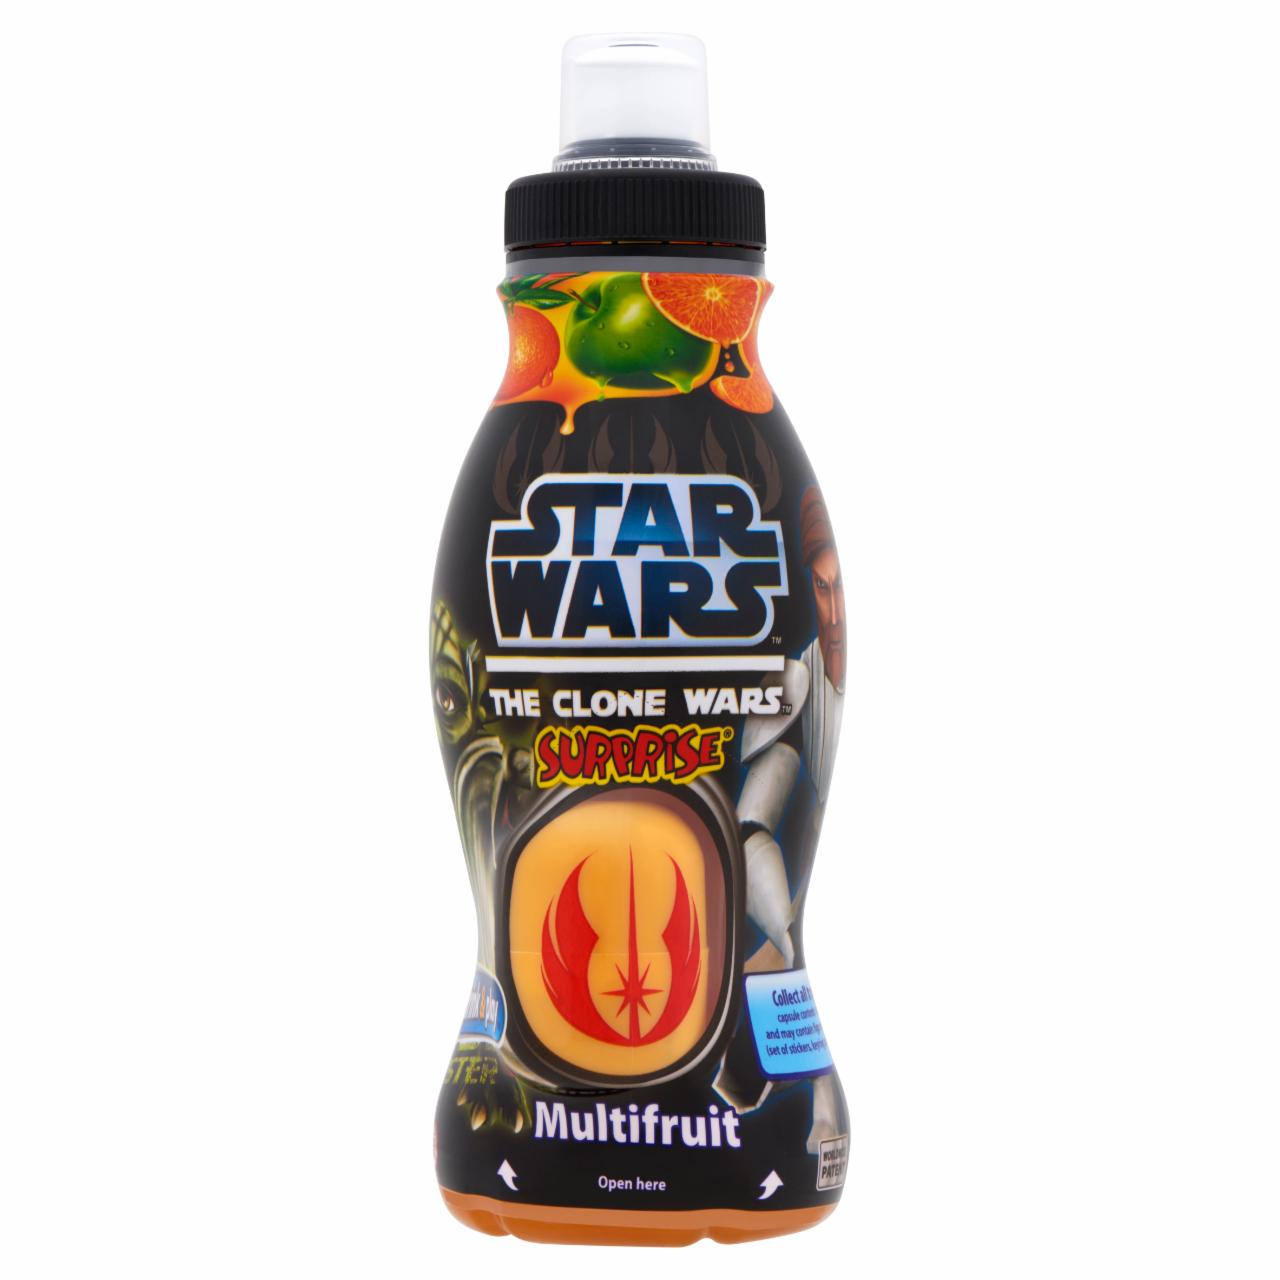 Képek - Star Wars The Clone Wars Surprise Multifruit gyümölcsital 300 ml